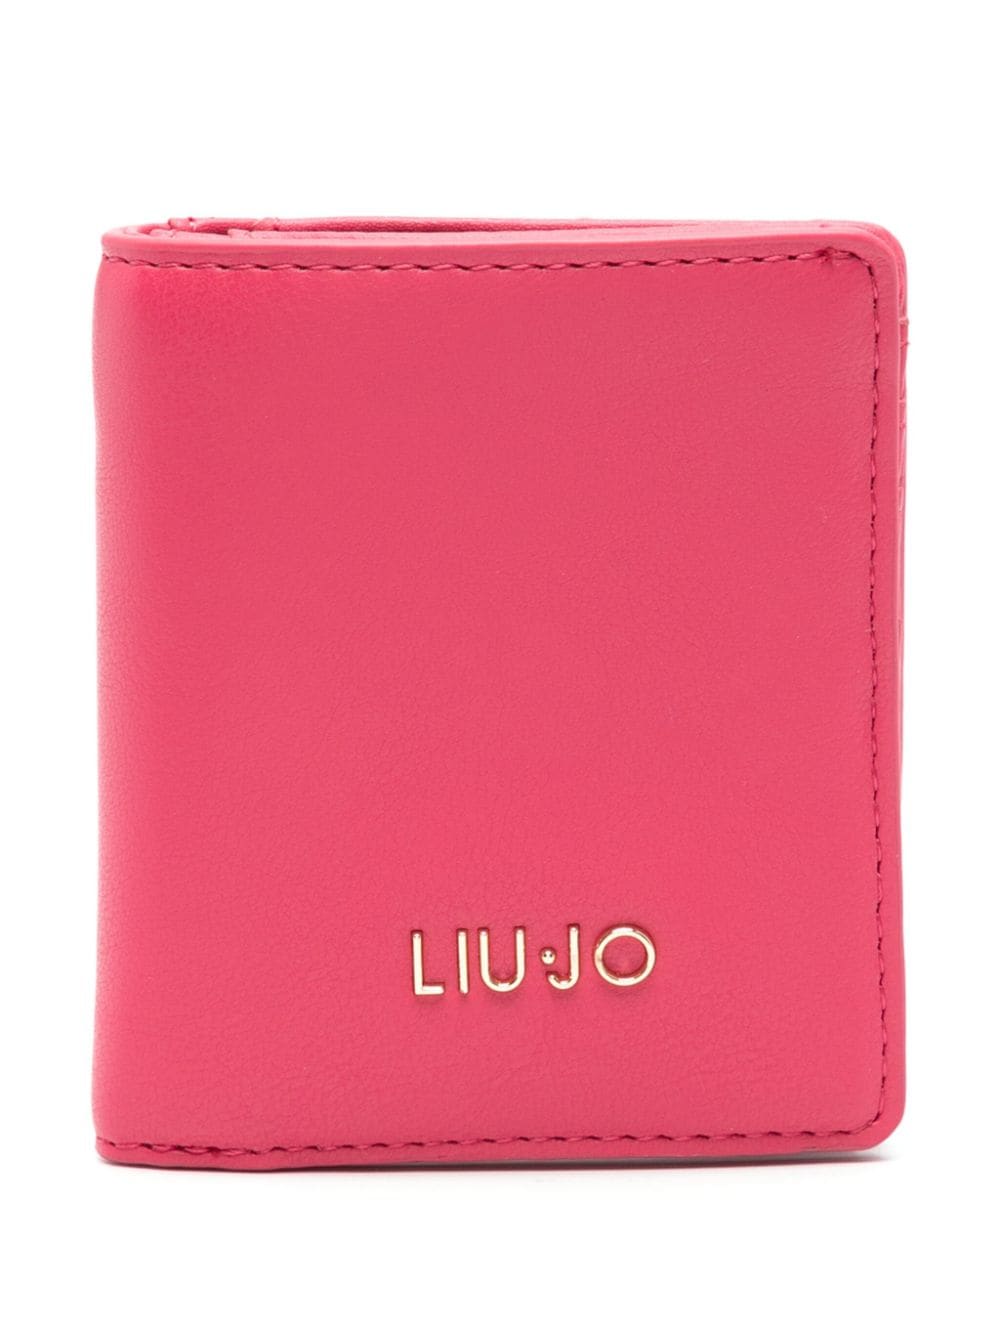 LIU JO Portemonnaie mit Logo - Rosa von LIU JO